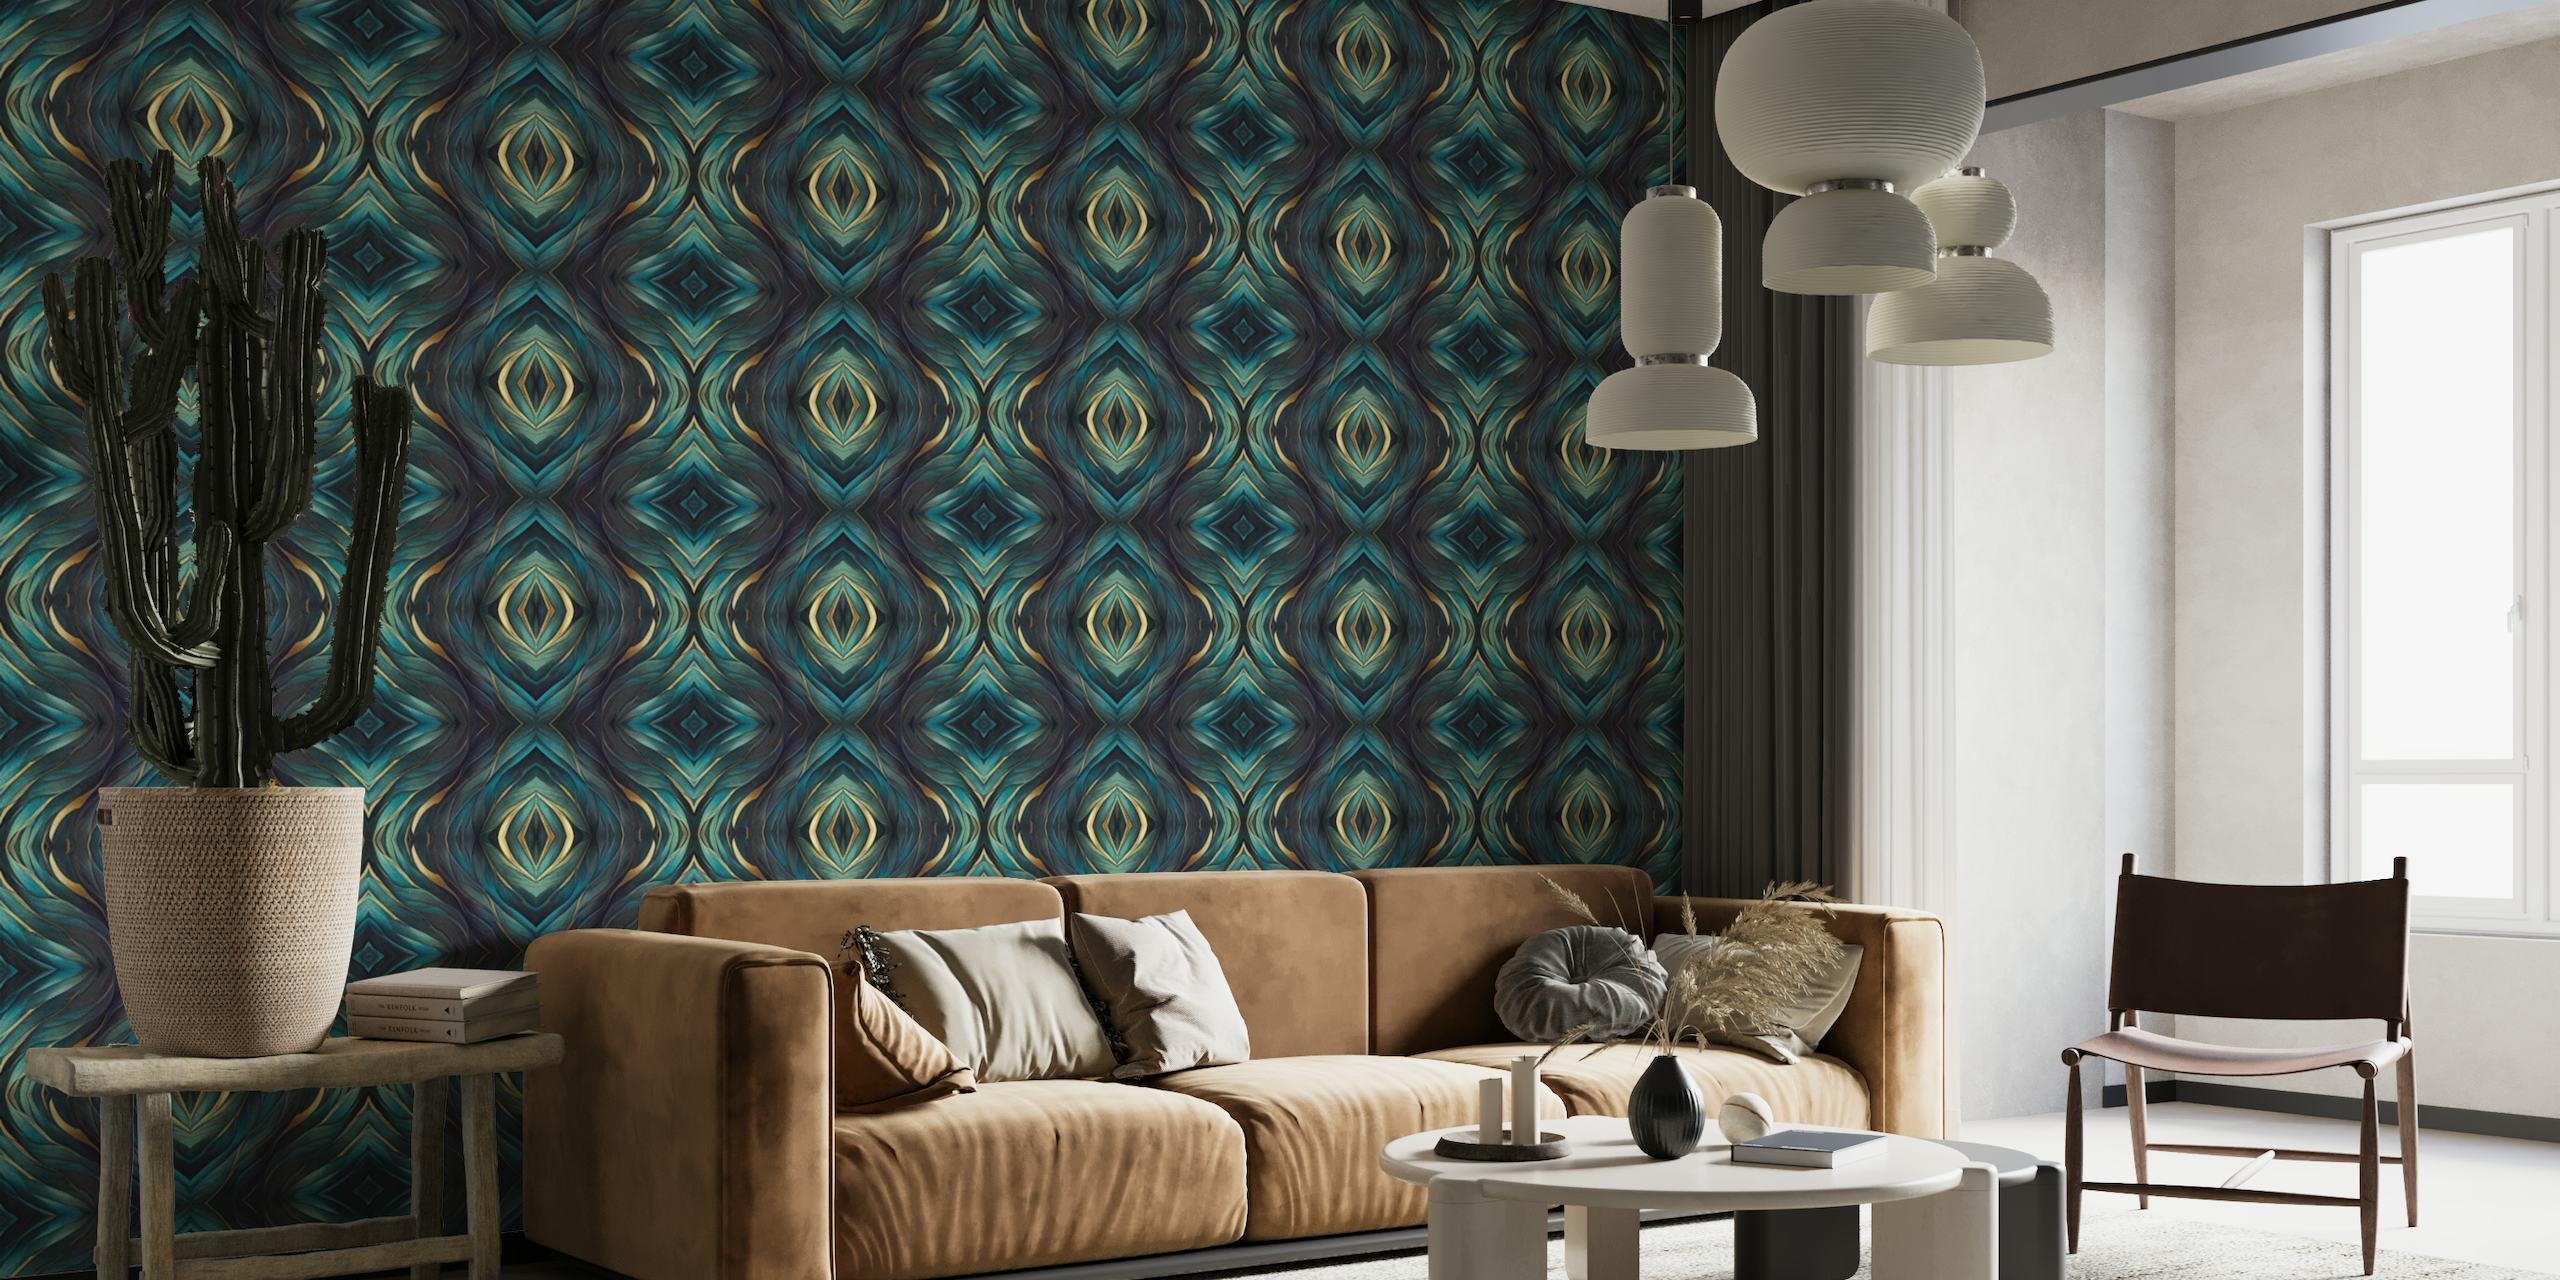 Artisanal Mediterranean Tile Design Teal Blue Gold papel pintado